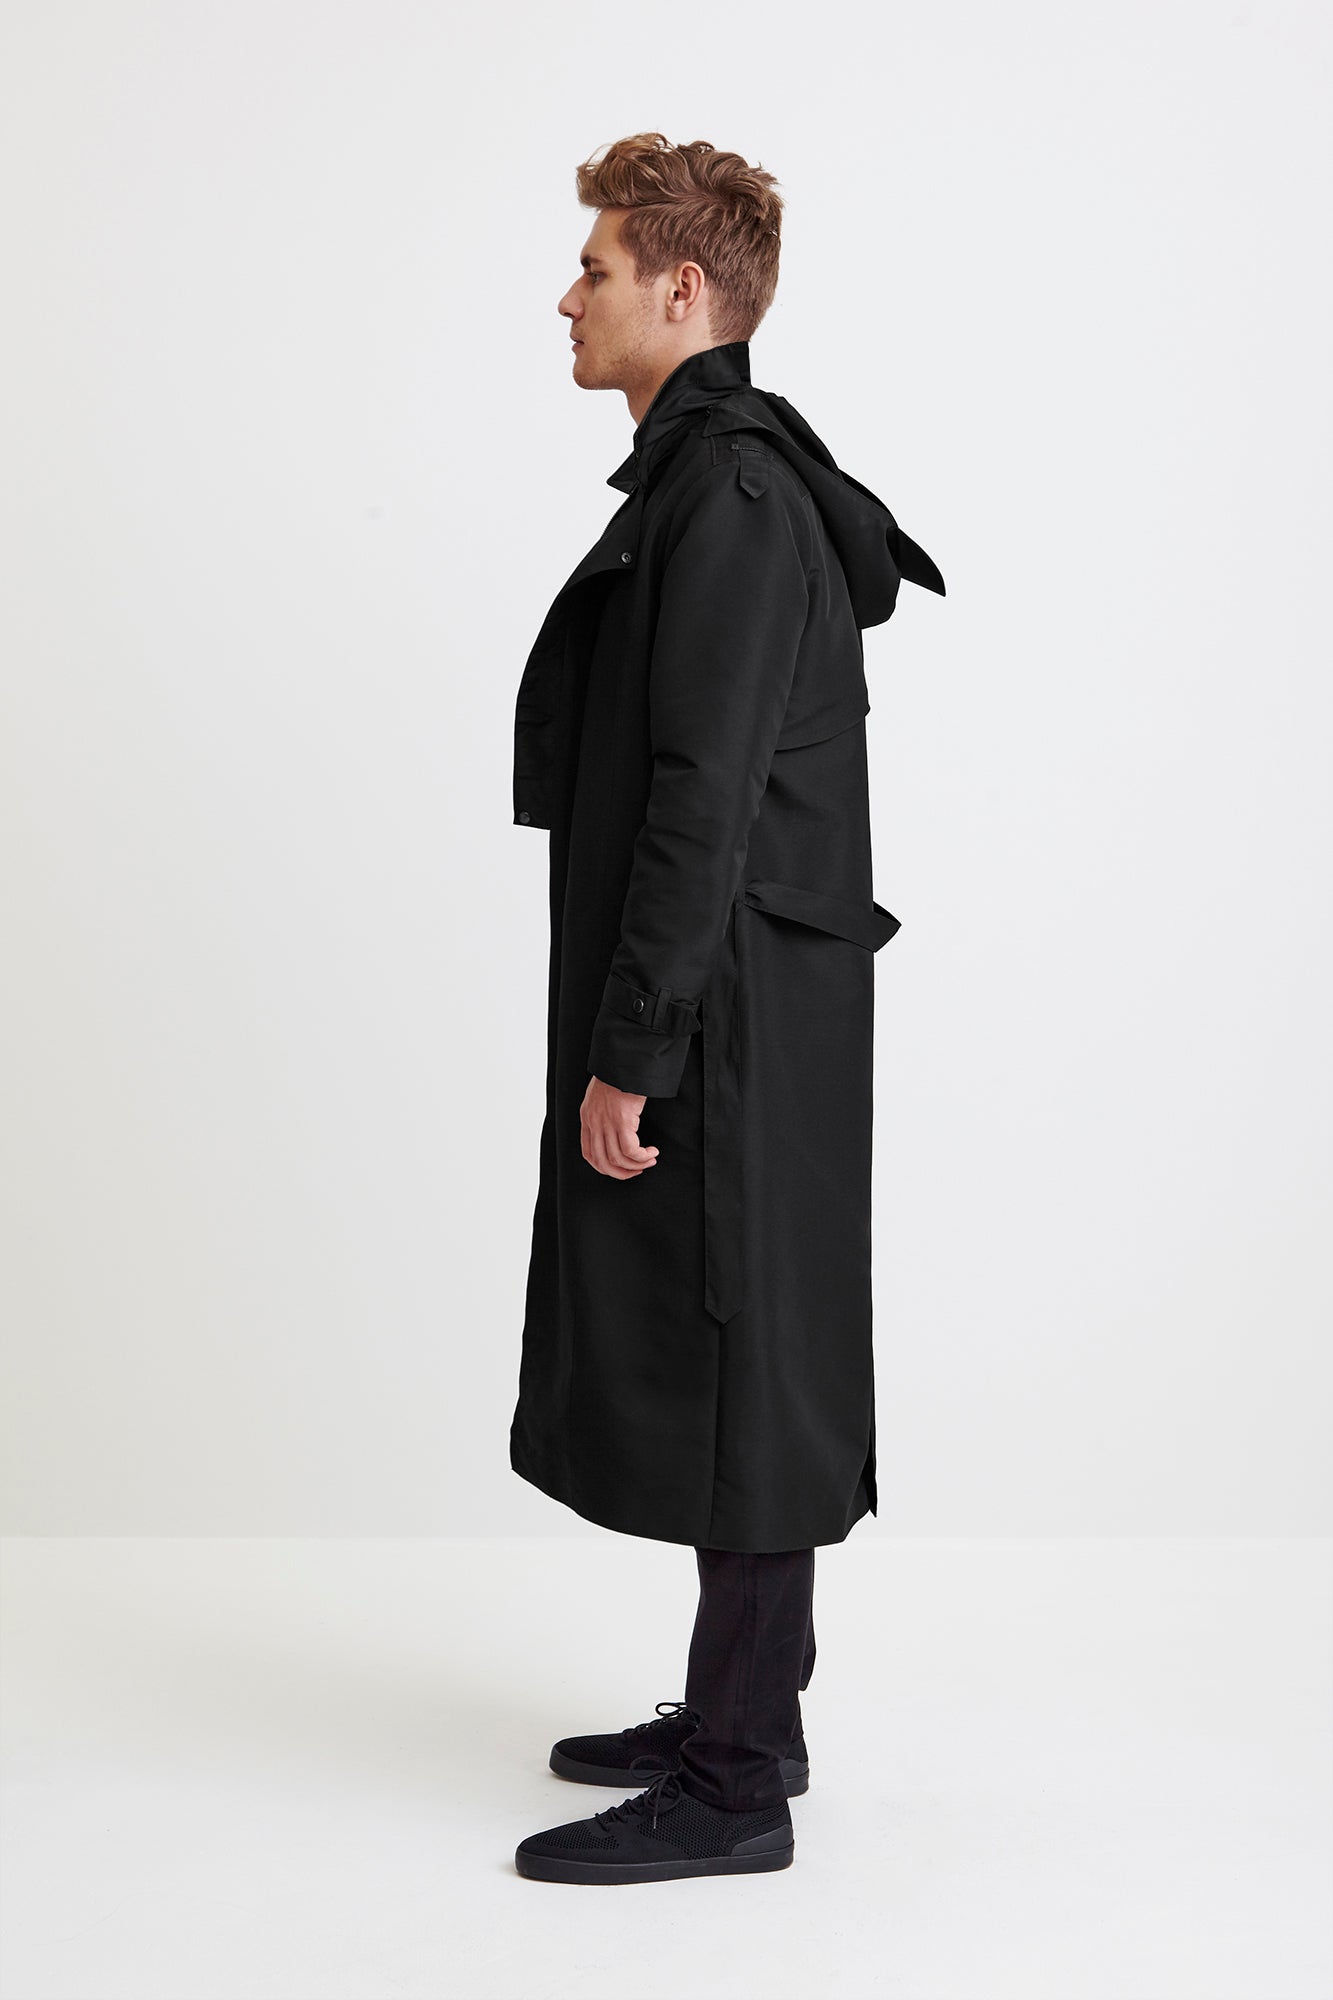 LONG ZIPPER COAT - black raincoat for men